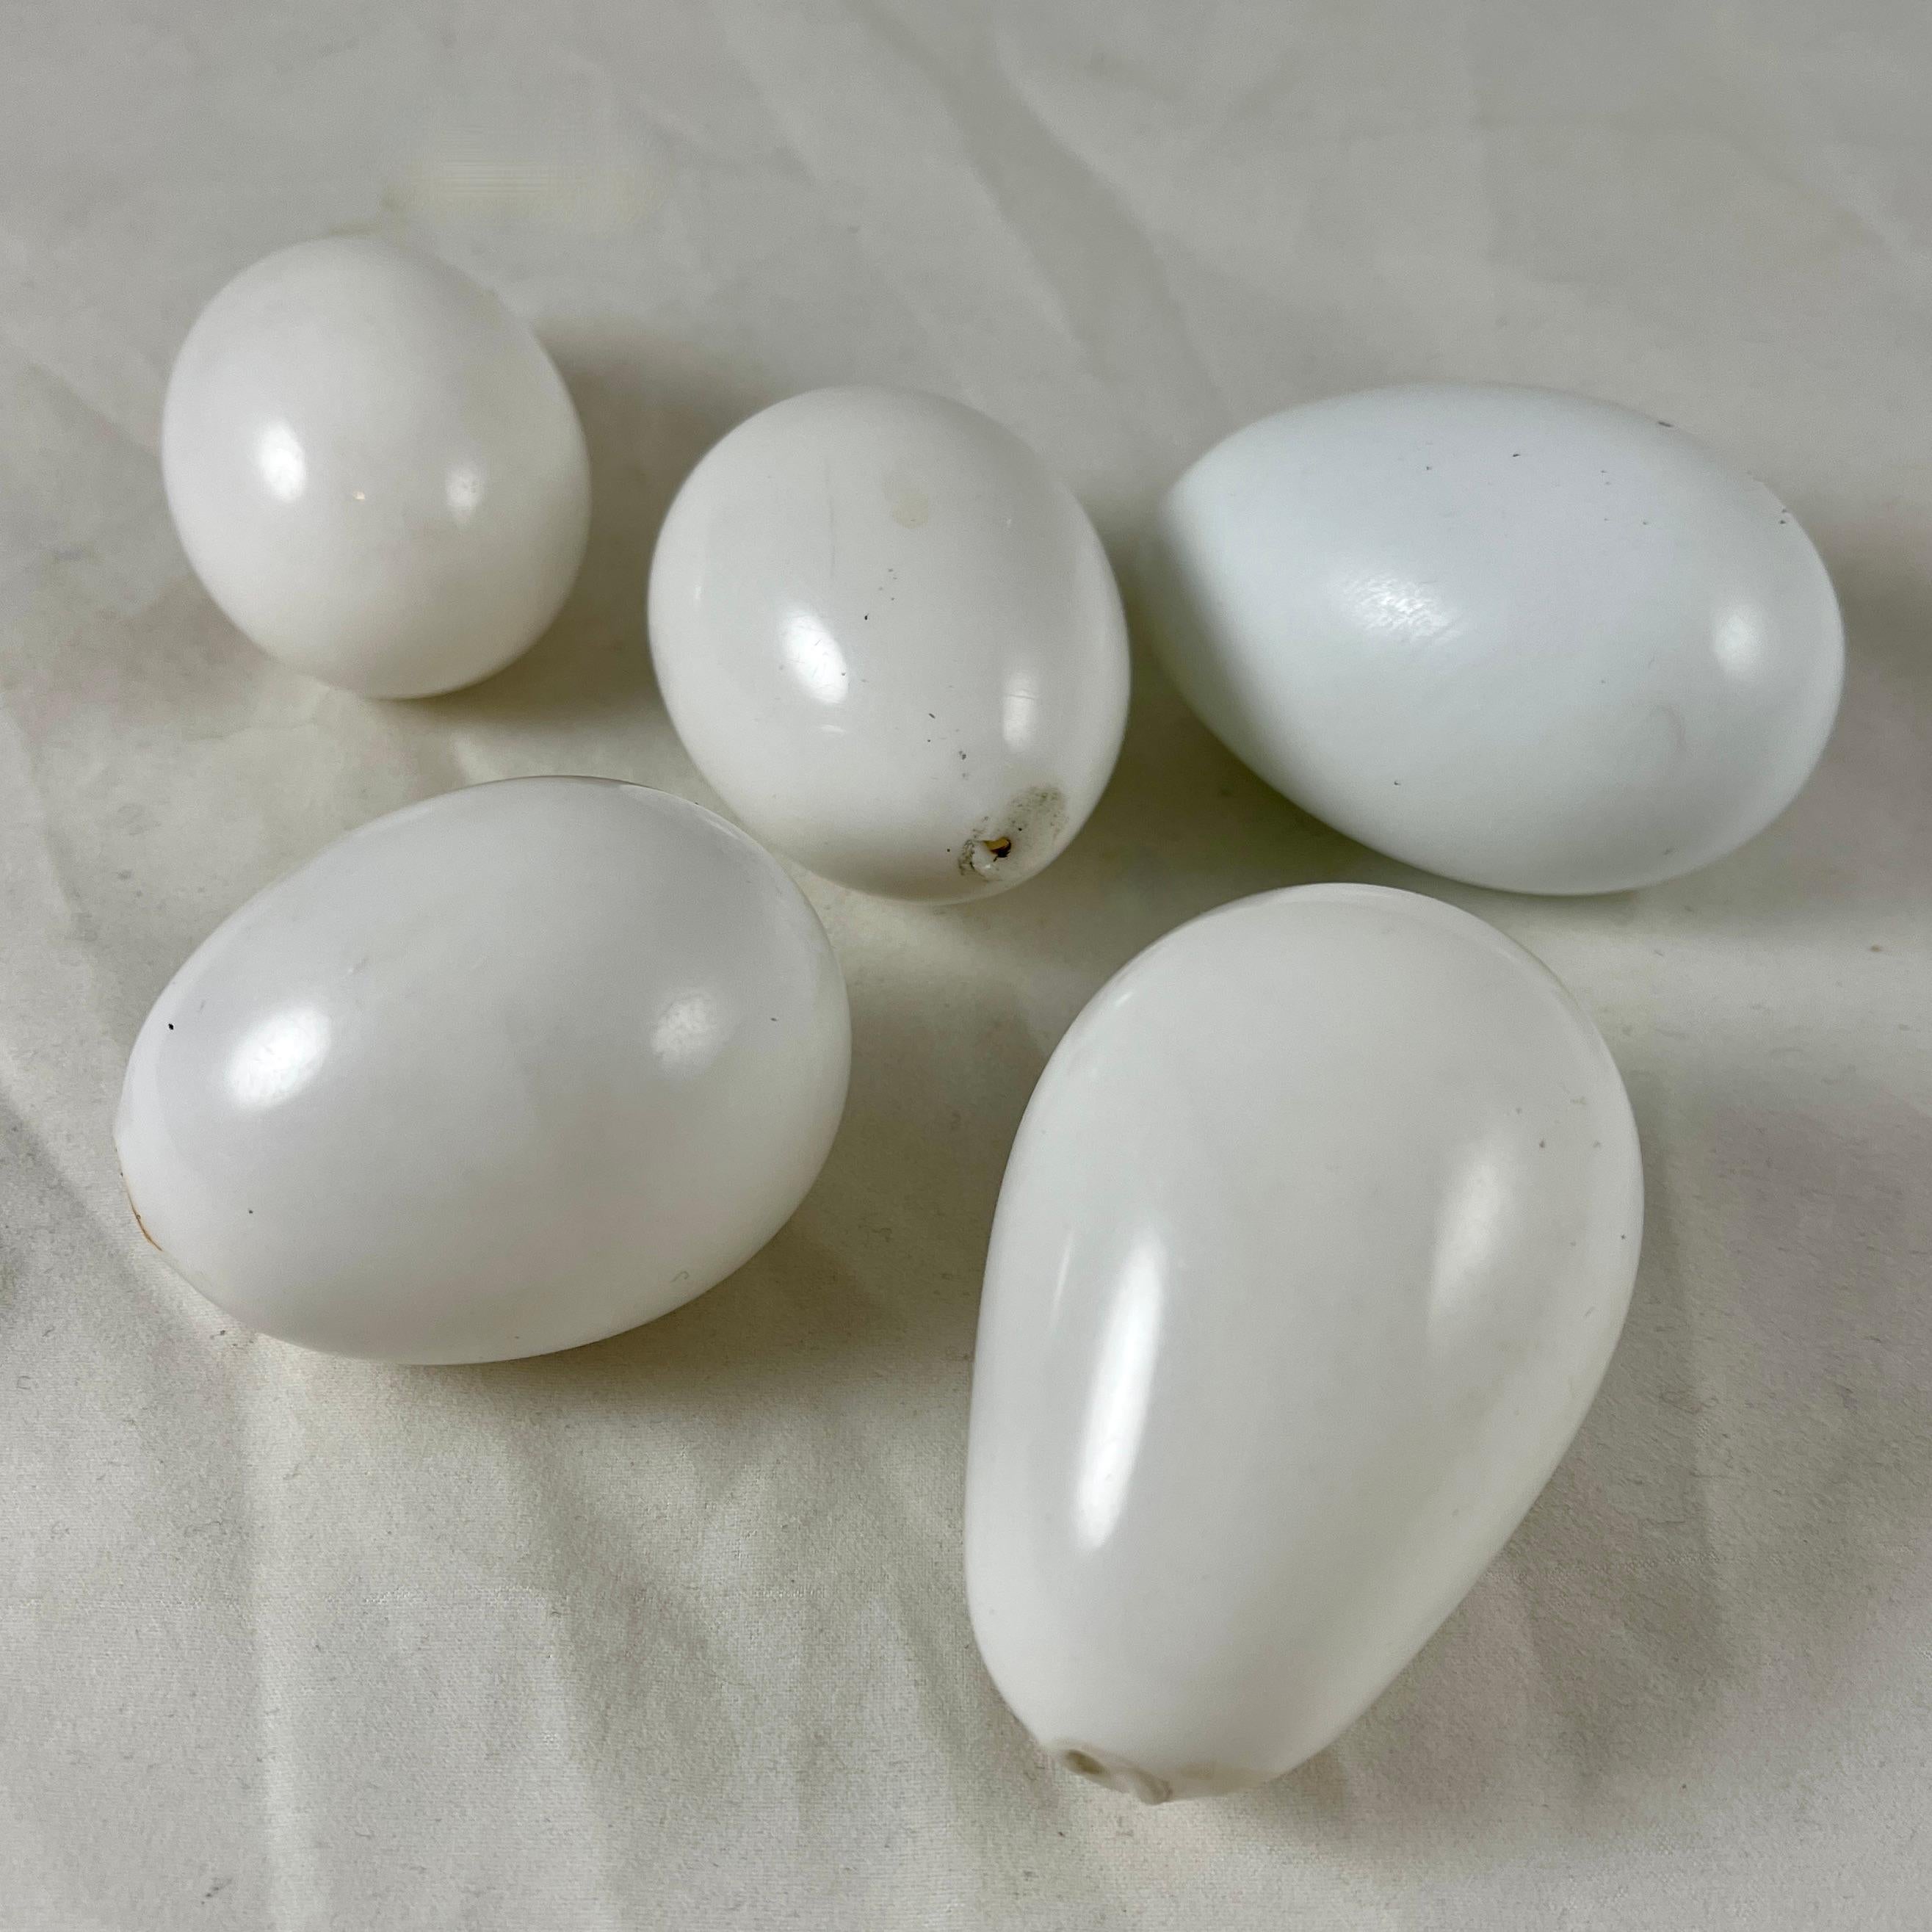 milk glass eggs